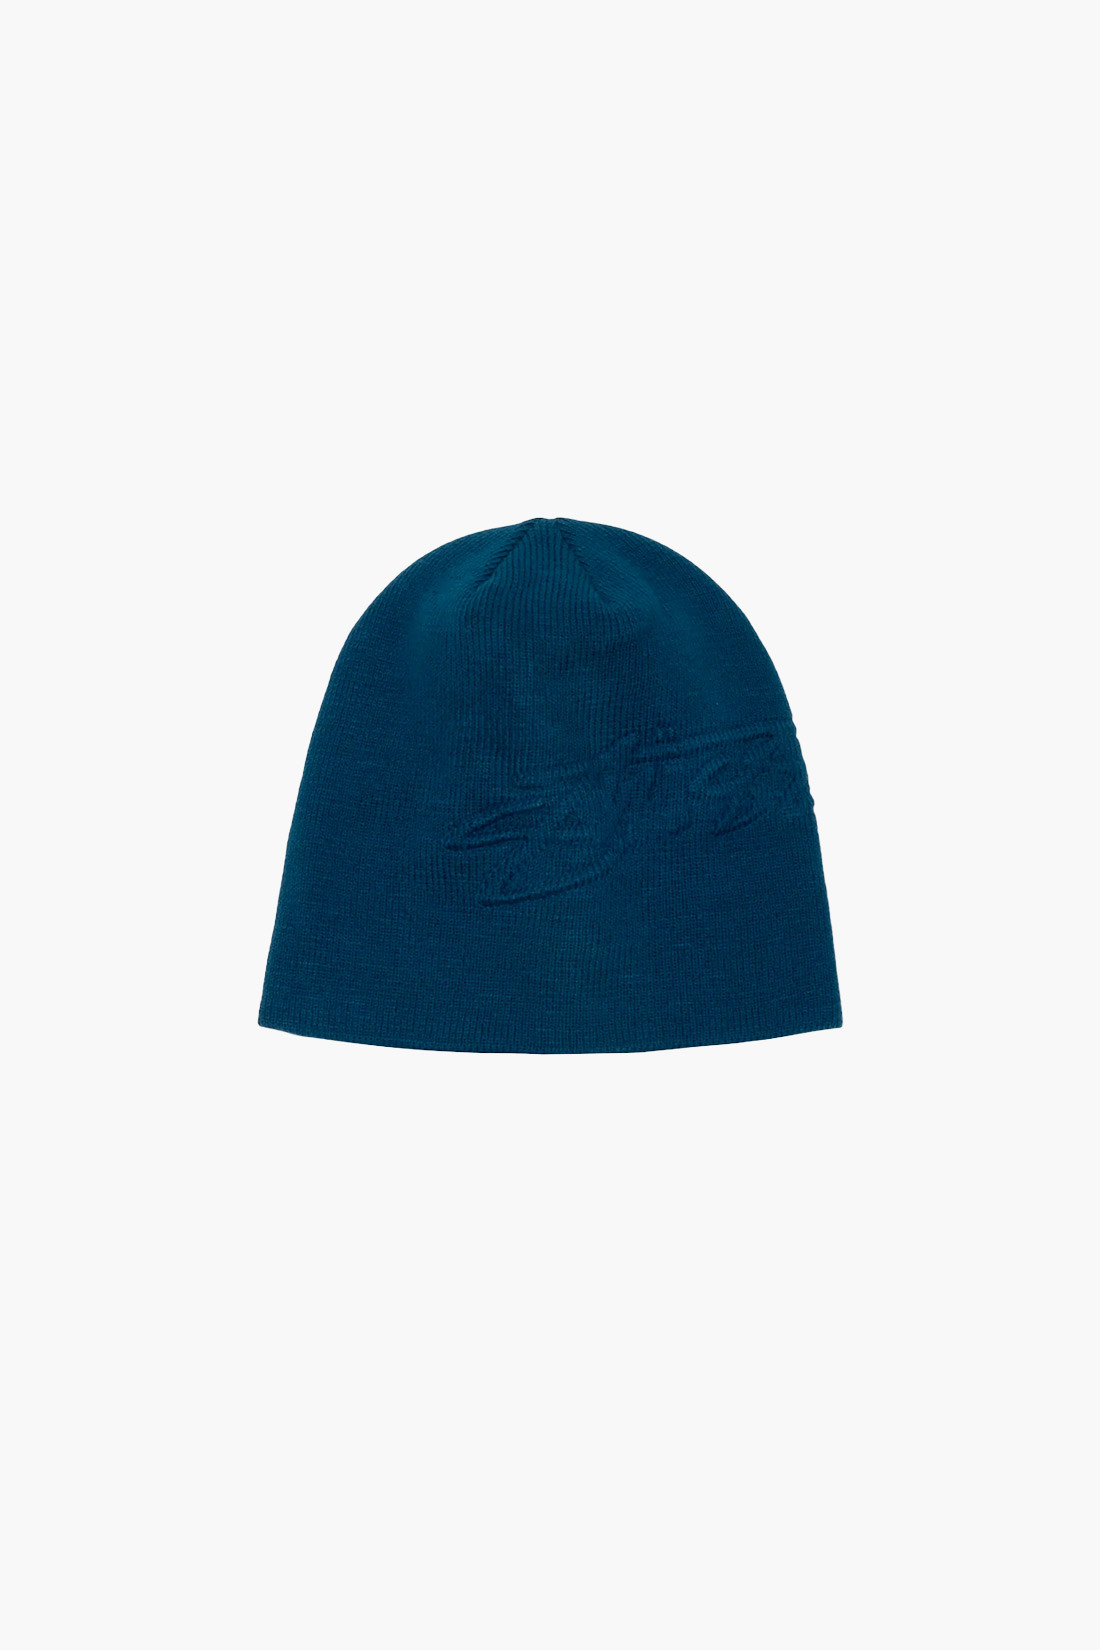 Embossed smooth stock skullcap Sea blue